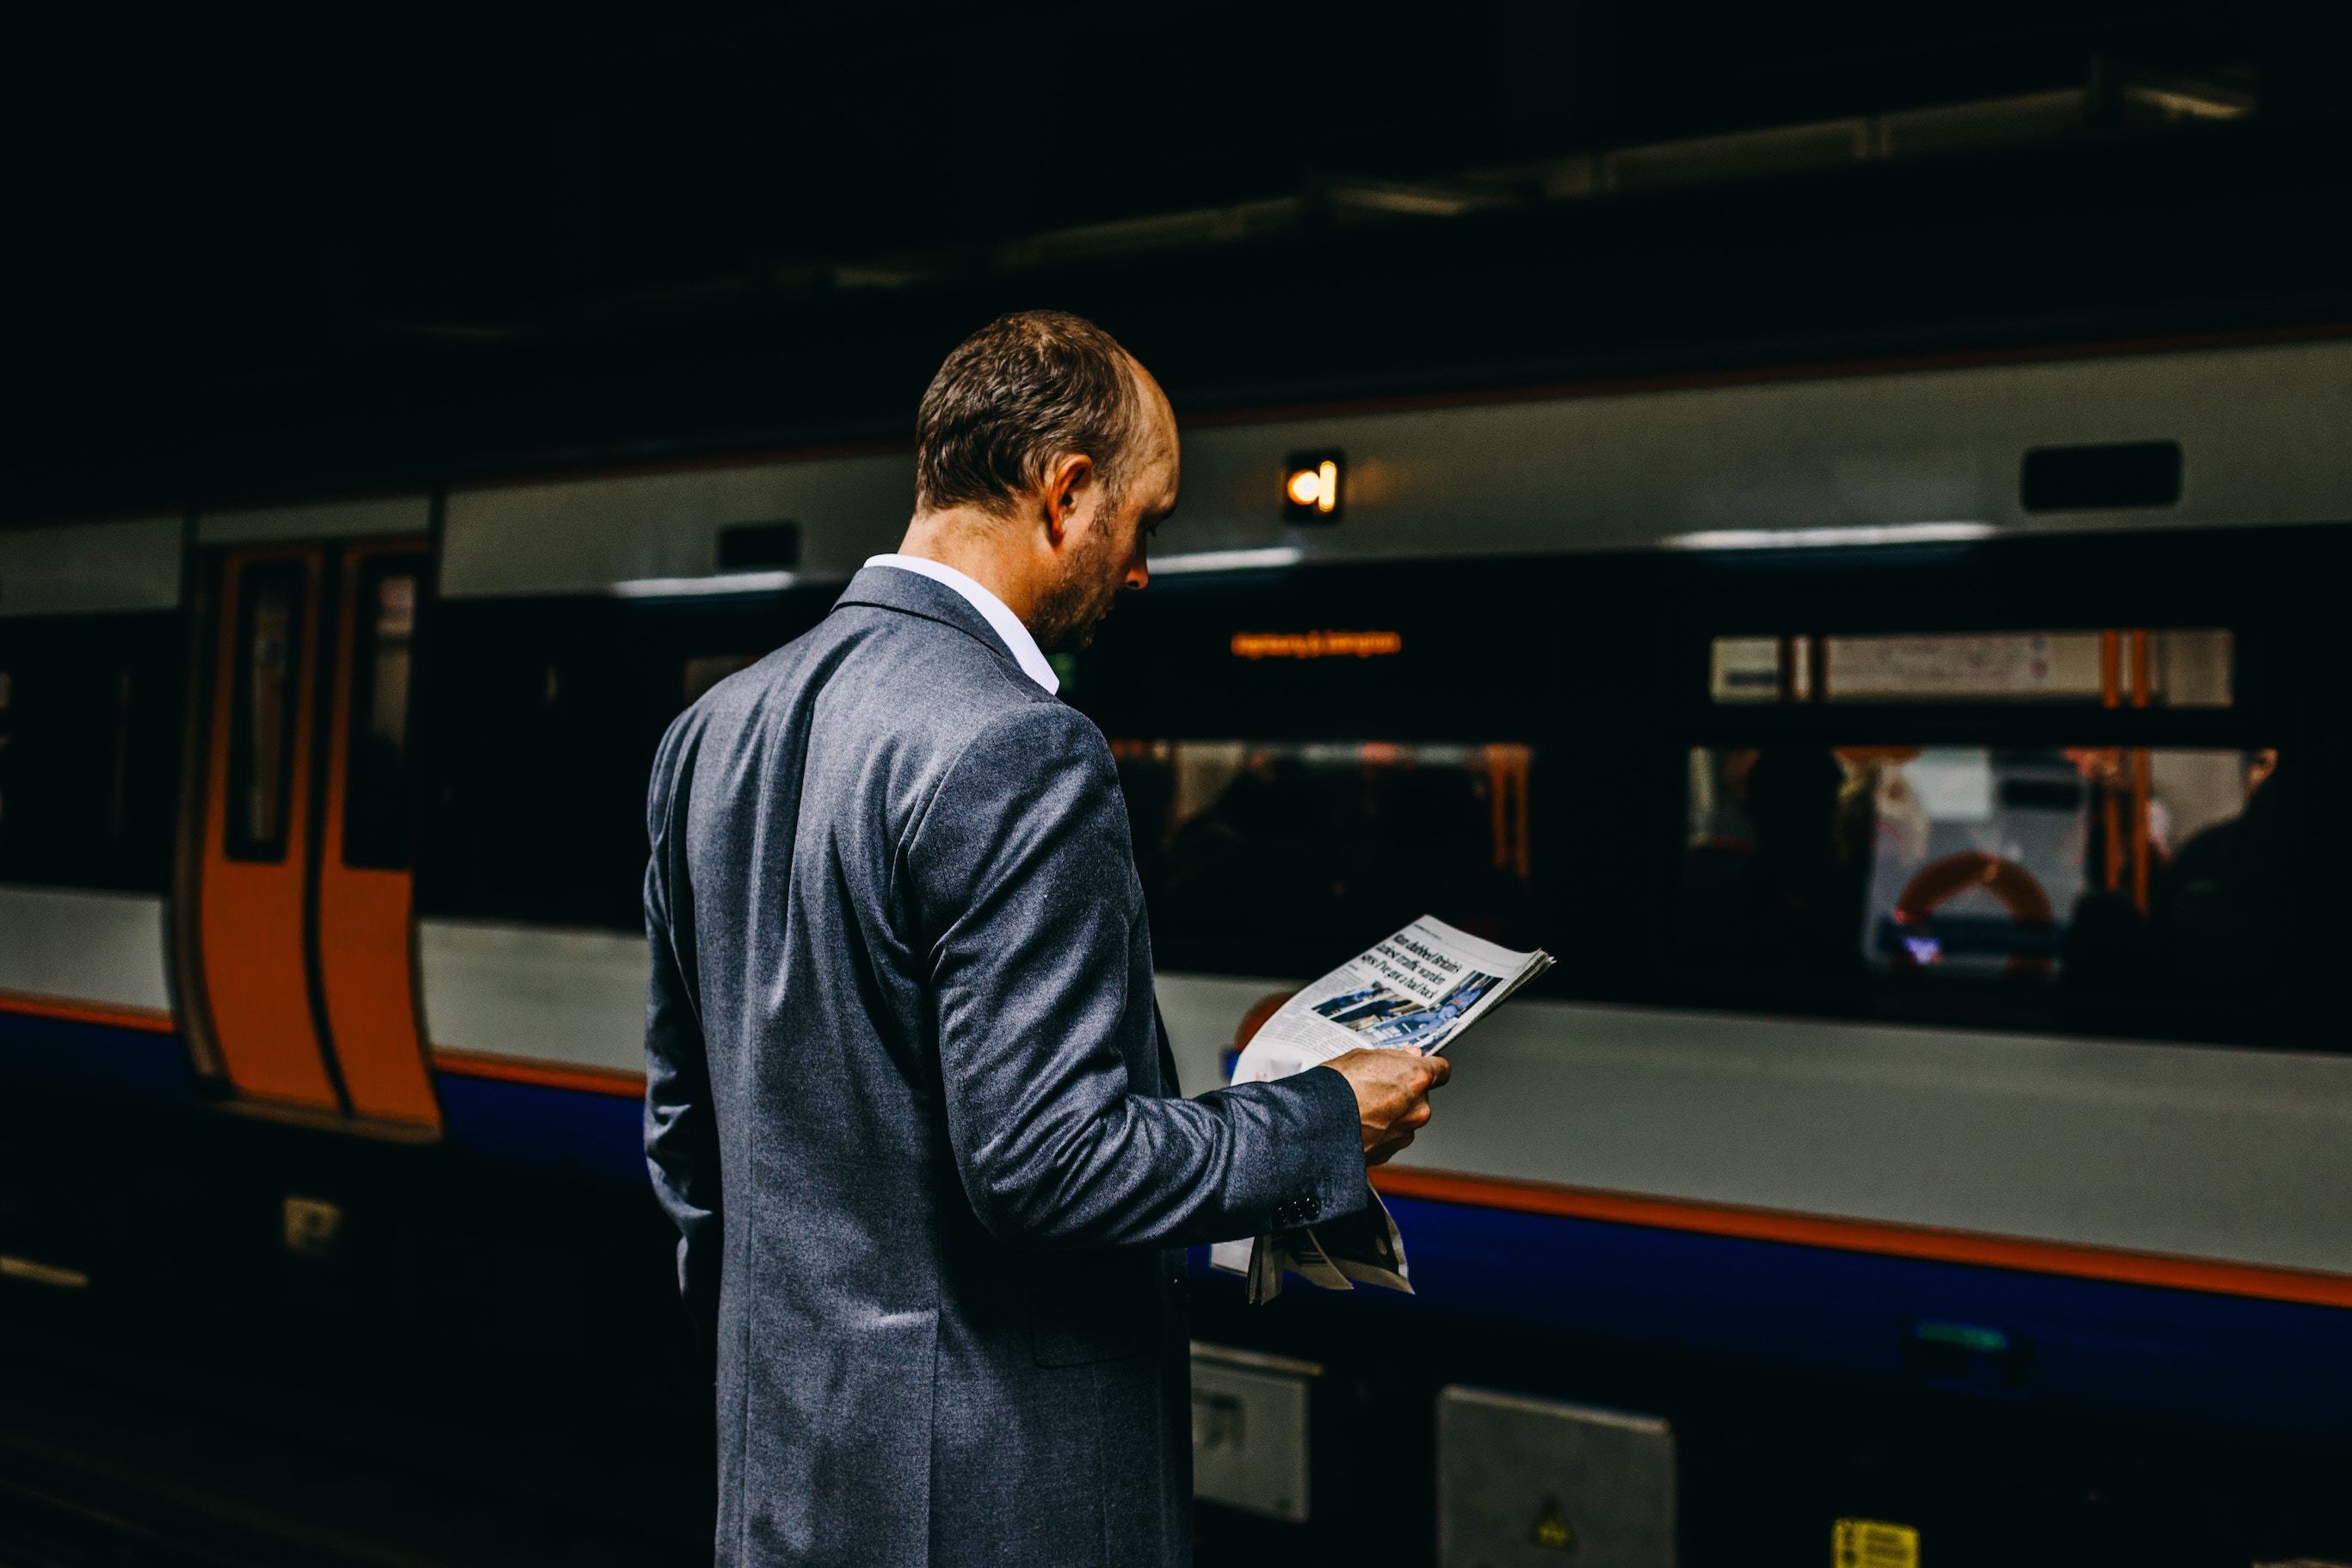 Man standing on train platform reading newspaper